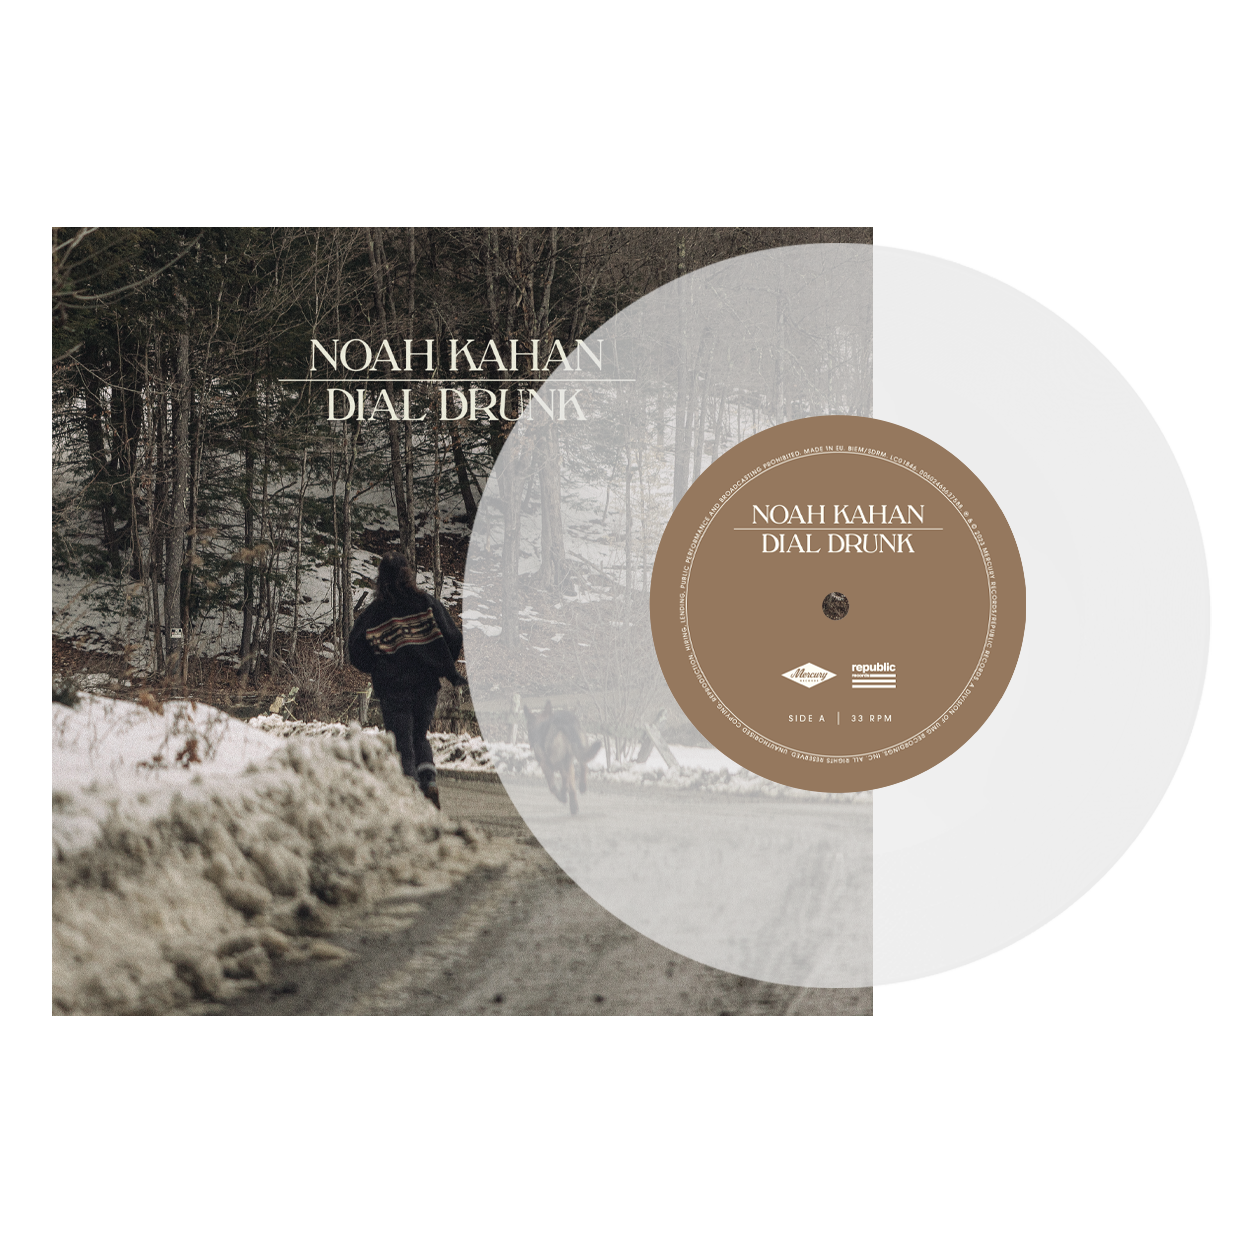 Noah Kahan - Dial Drunk: Limited Clear Vinyl 7" Single